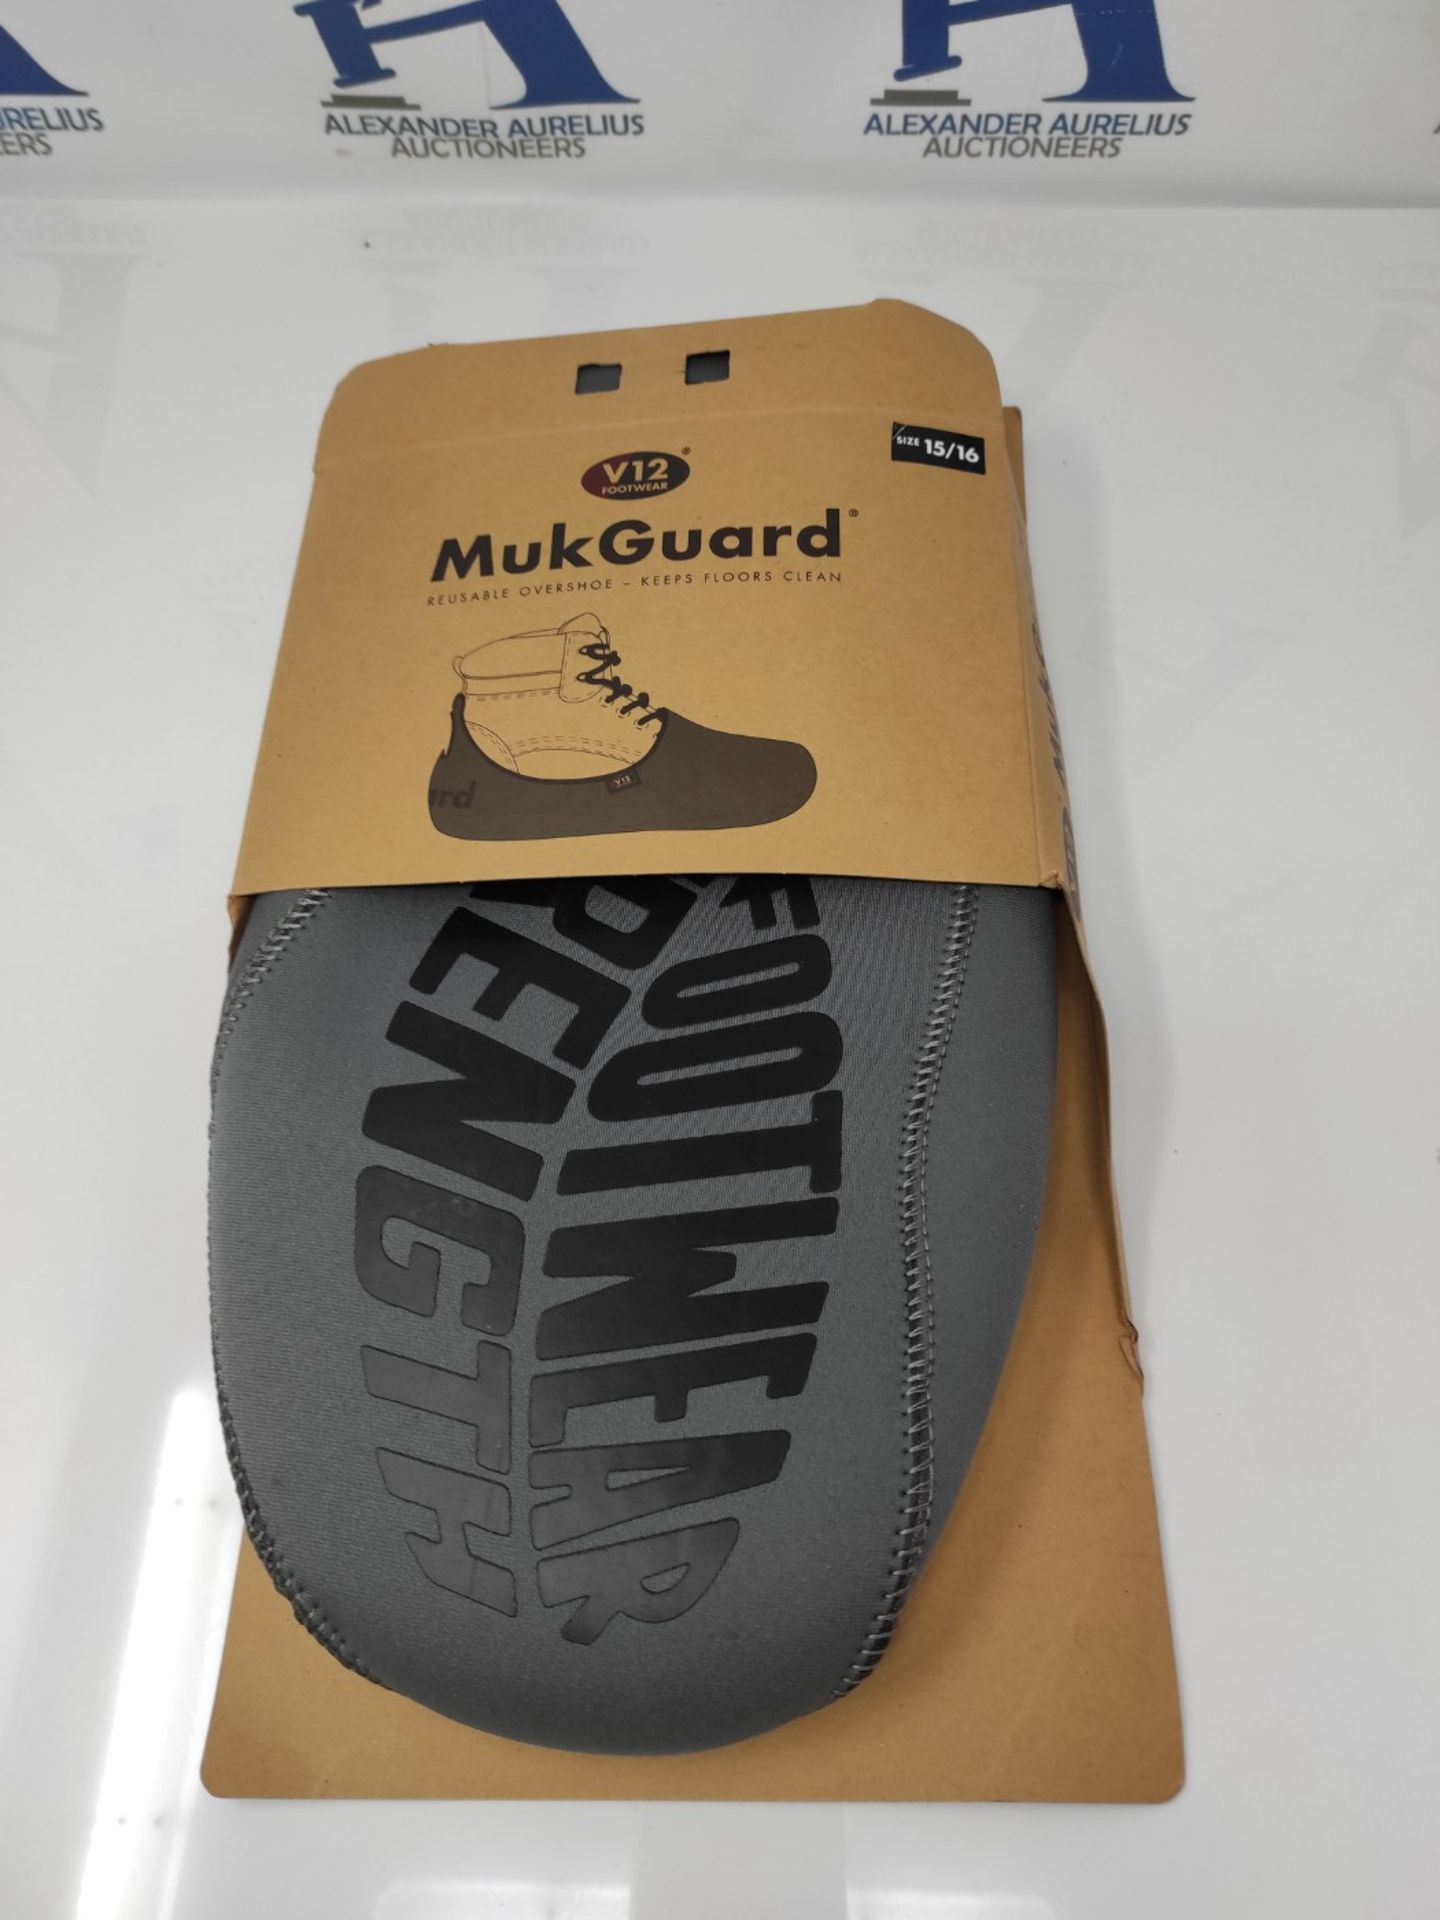 V12 MukGuard, Reusable Slip Resistant Neoprene Overshoe, 3XL (15/16), Grey - Image 2 of 2